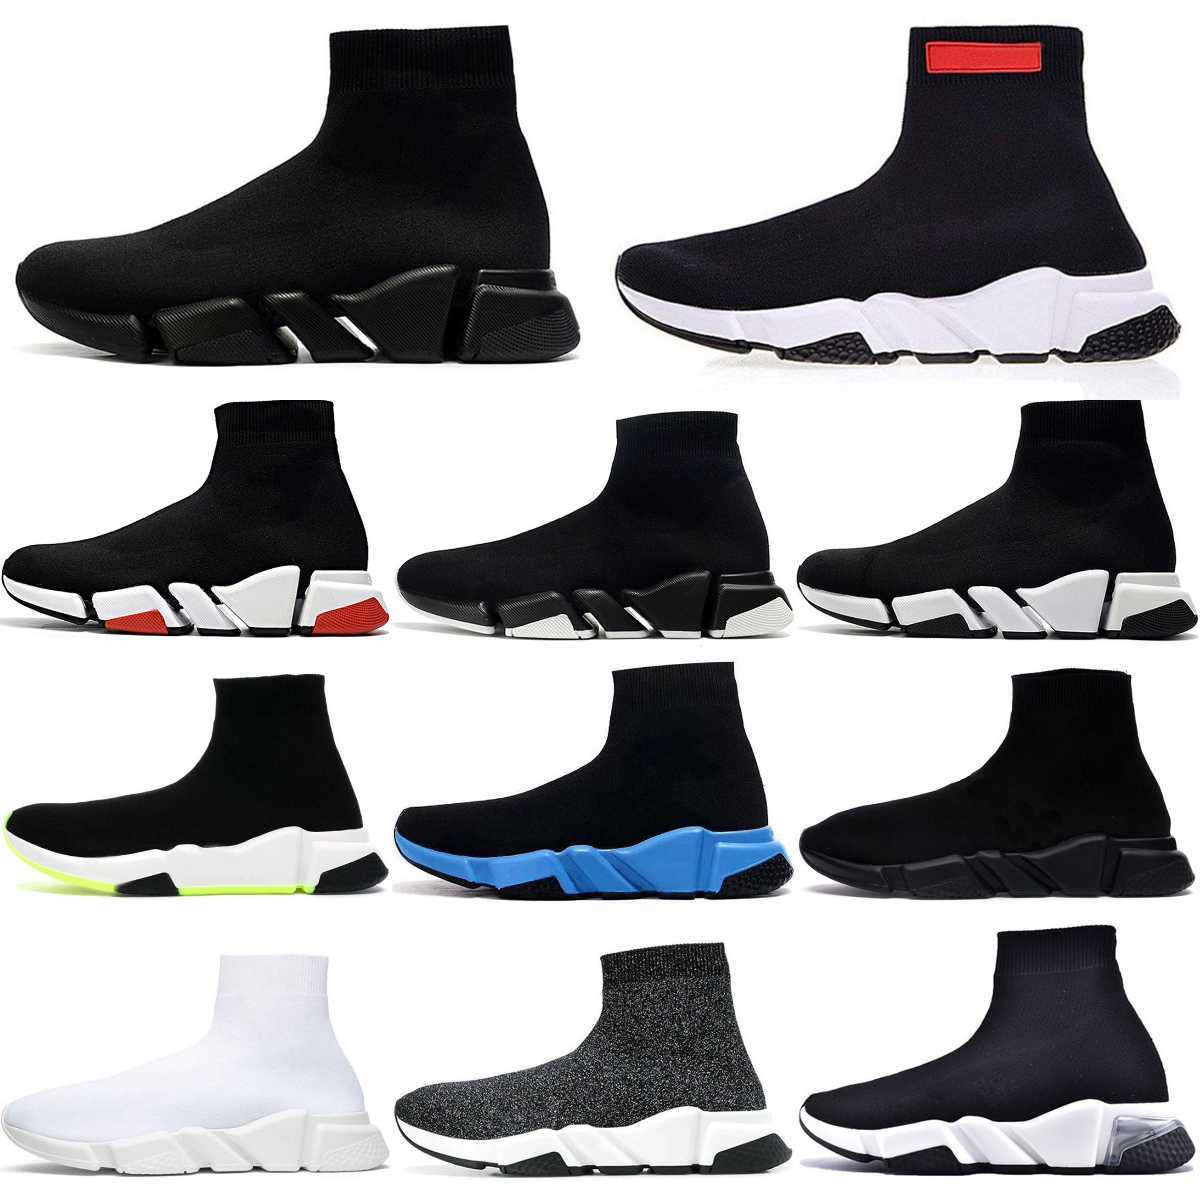 

Designers Speeds 2.0 V2 Luxury Casual Shoes Platform Sneaker Men Women Tripler S Paris Socks Boots Black White Blue Light Sliver Ruby Graffiti Trainers Sneakers S8, Please contact us